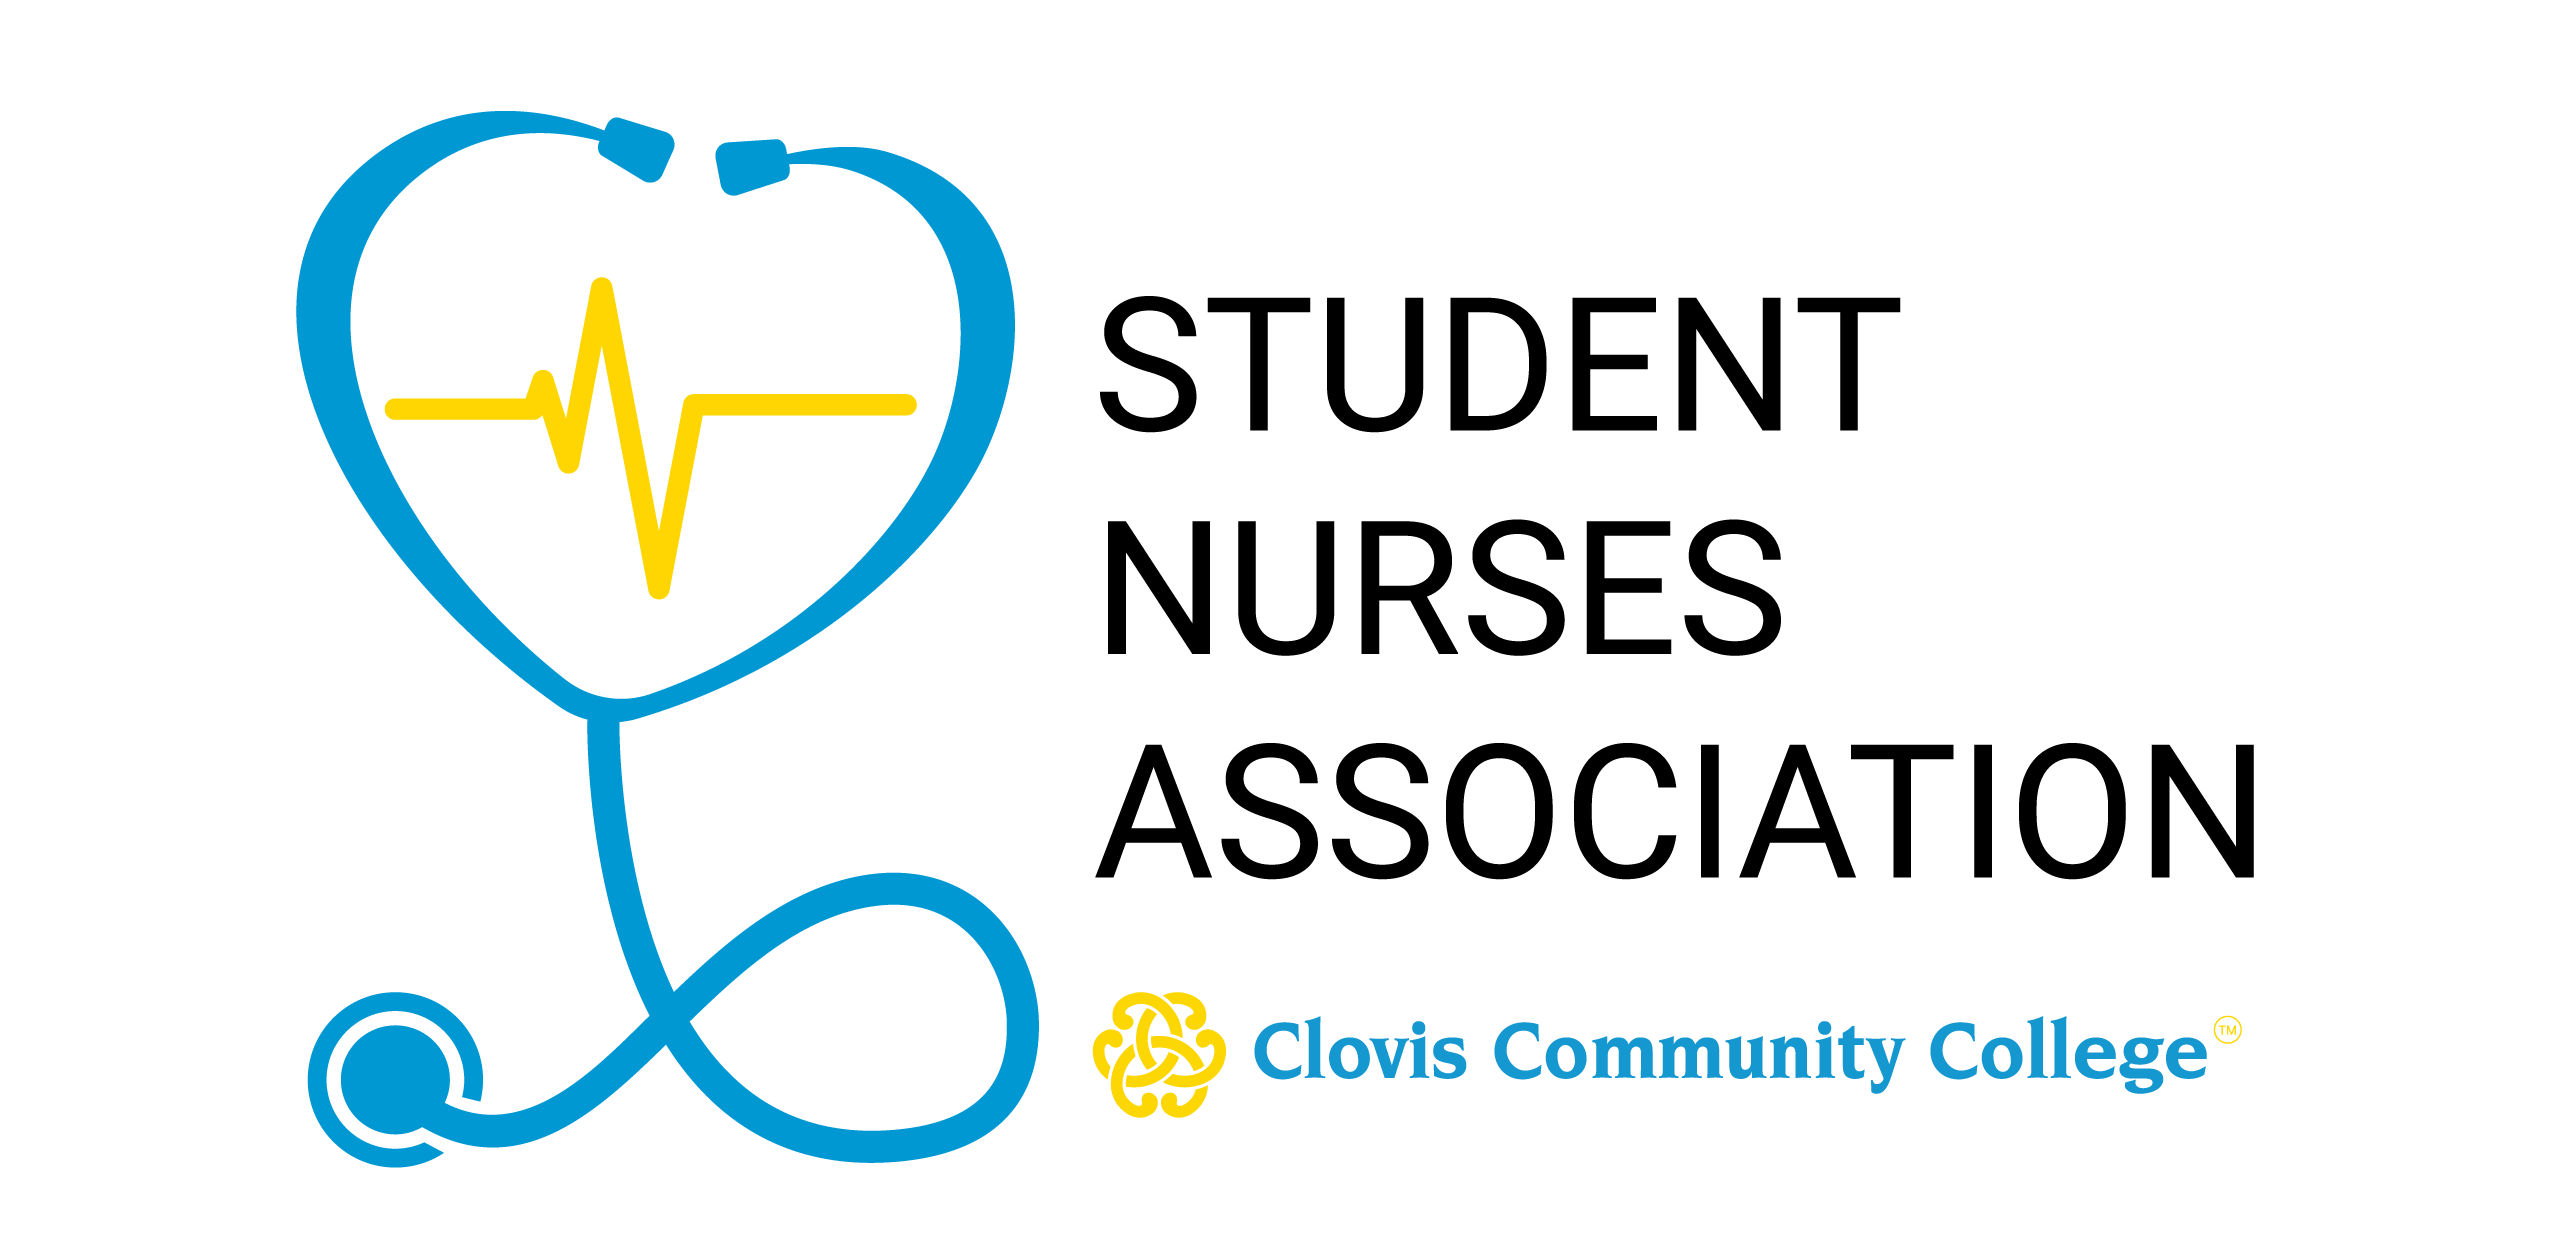 CCC's Student Nursing Association